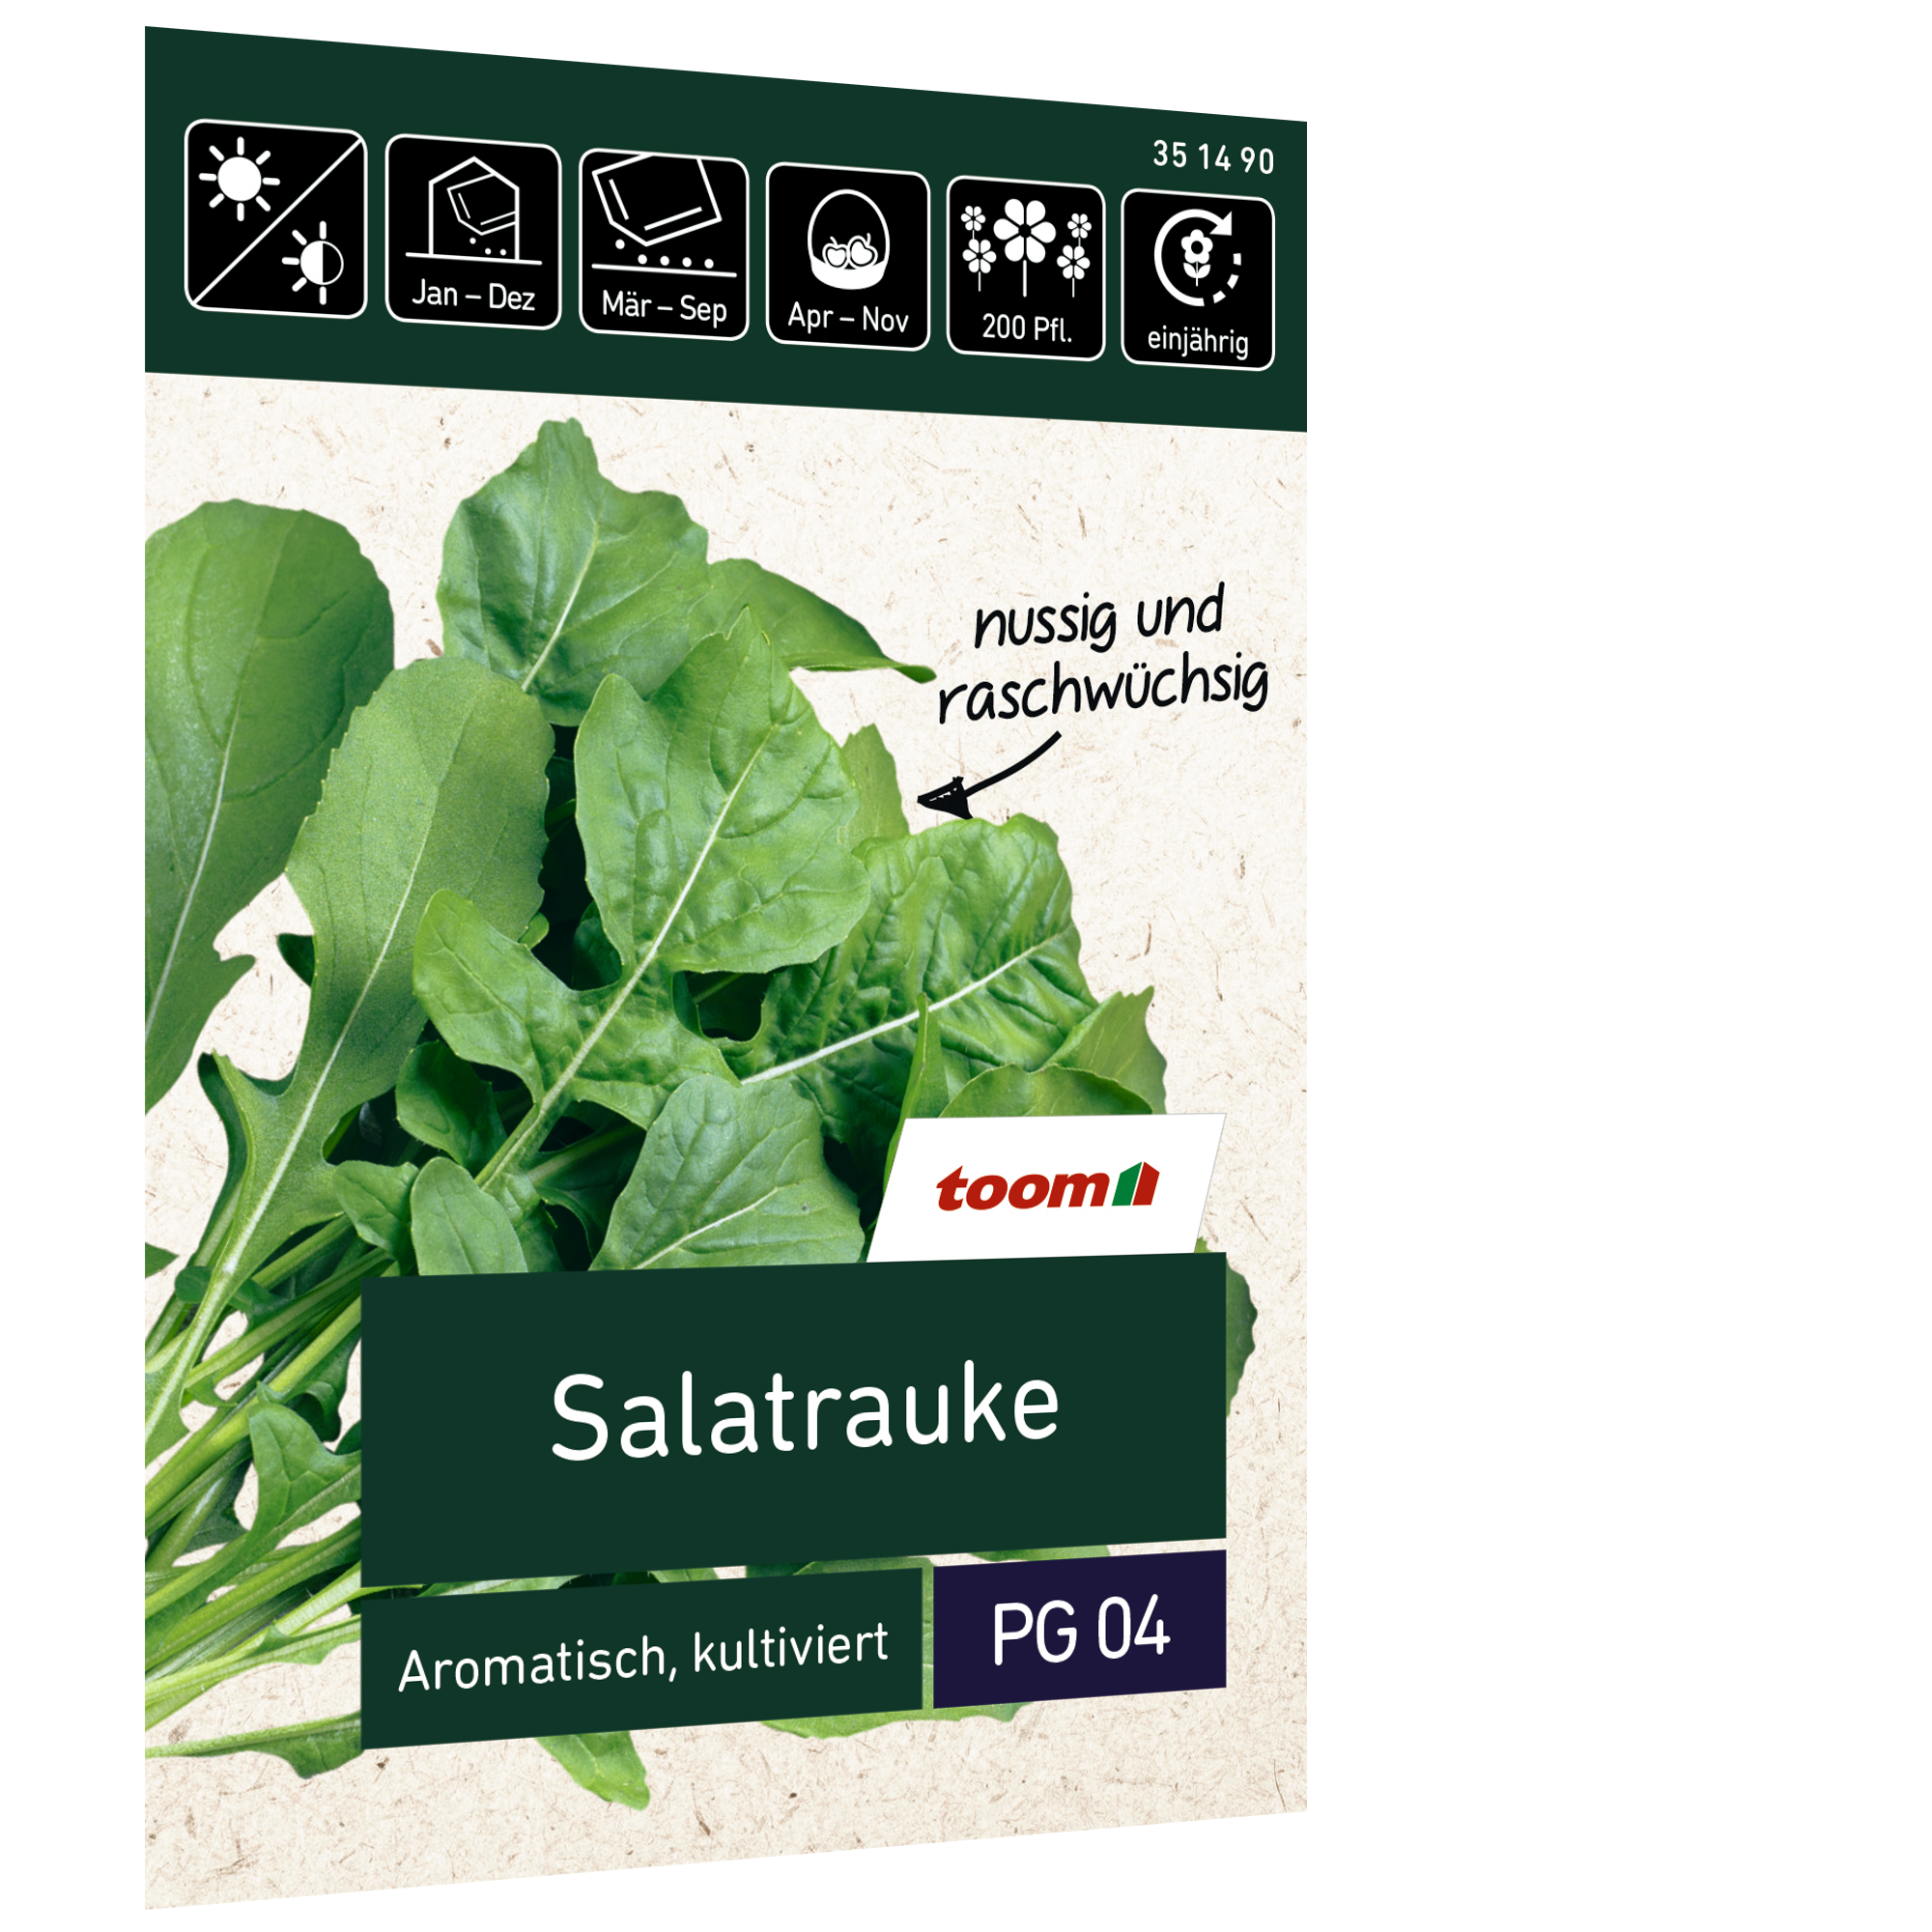 Salatrauke 'Aromatisch, kultiviert' + product picture